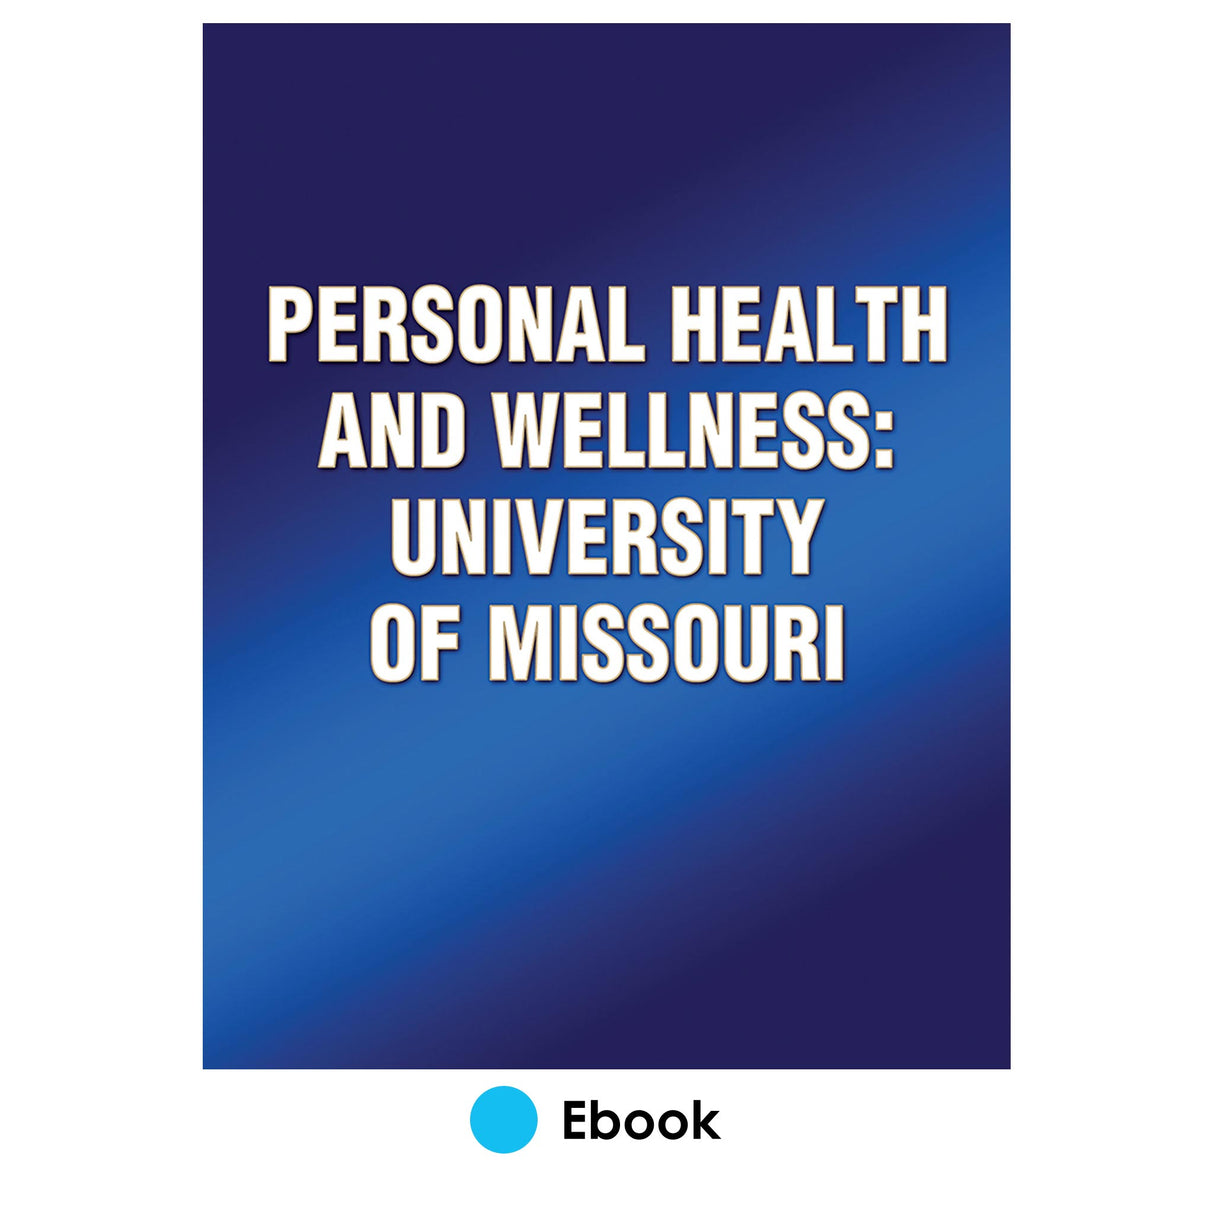 Personal Health and Wellness: University of Missouri